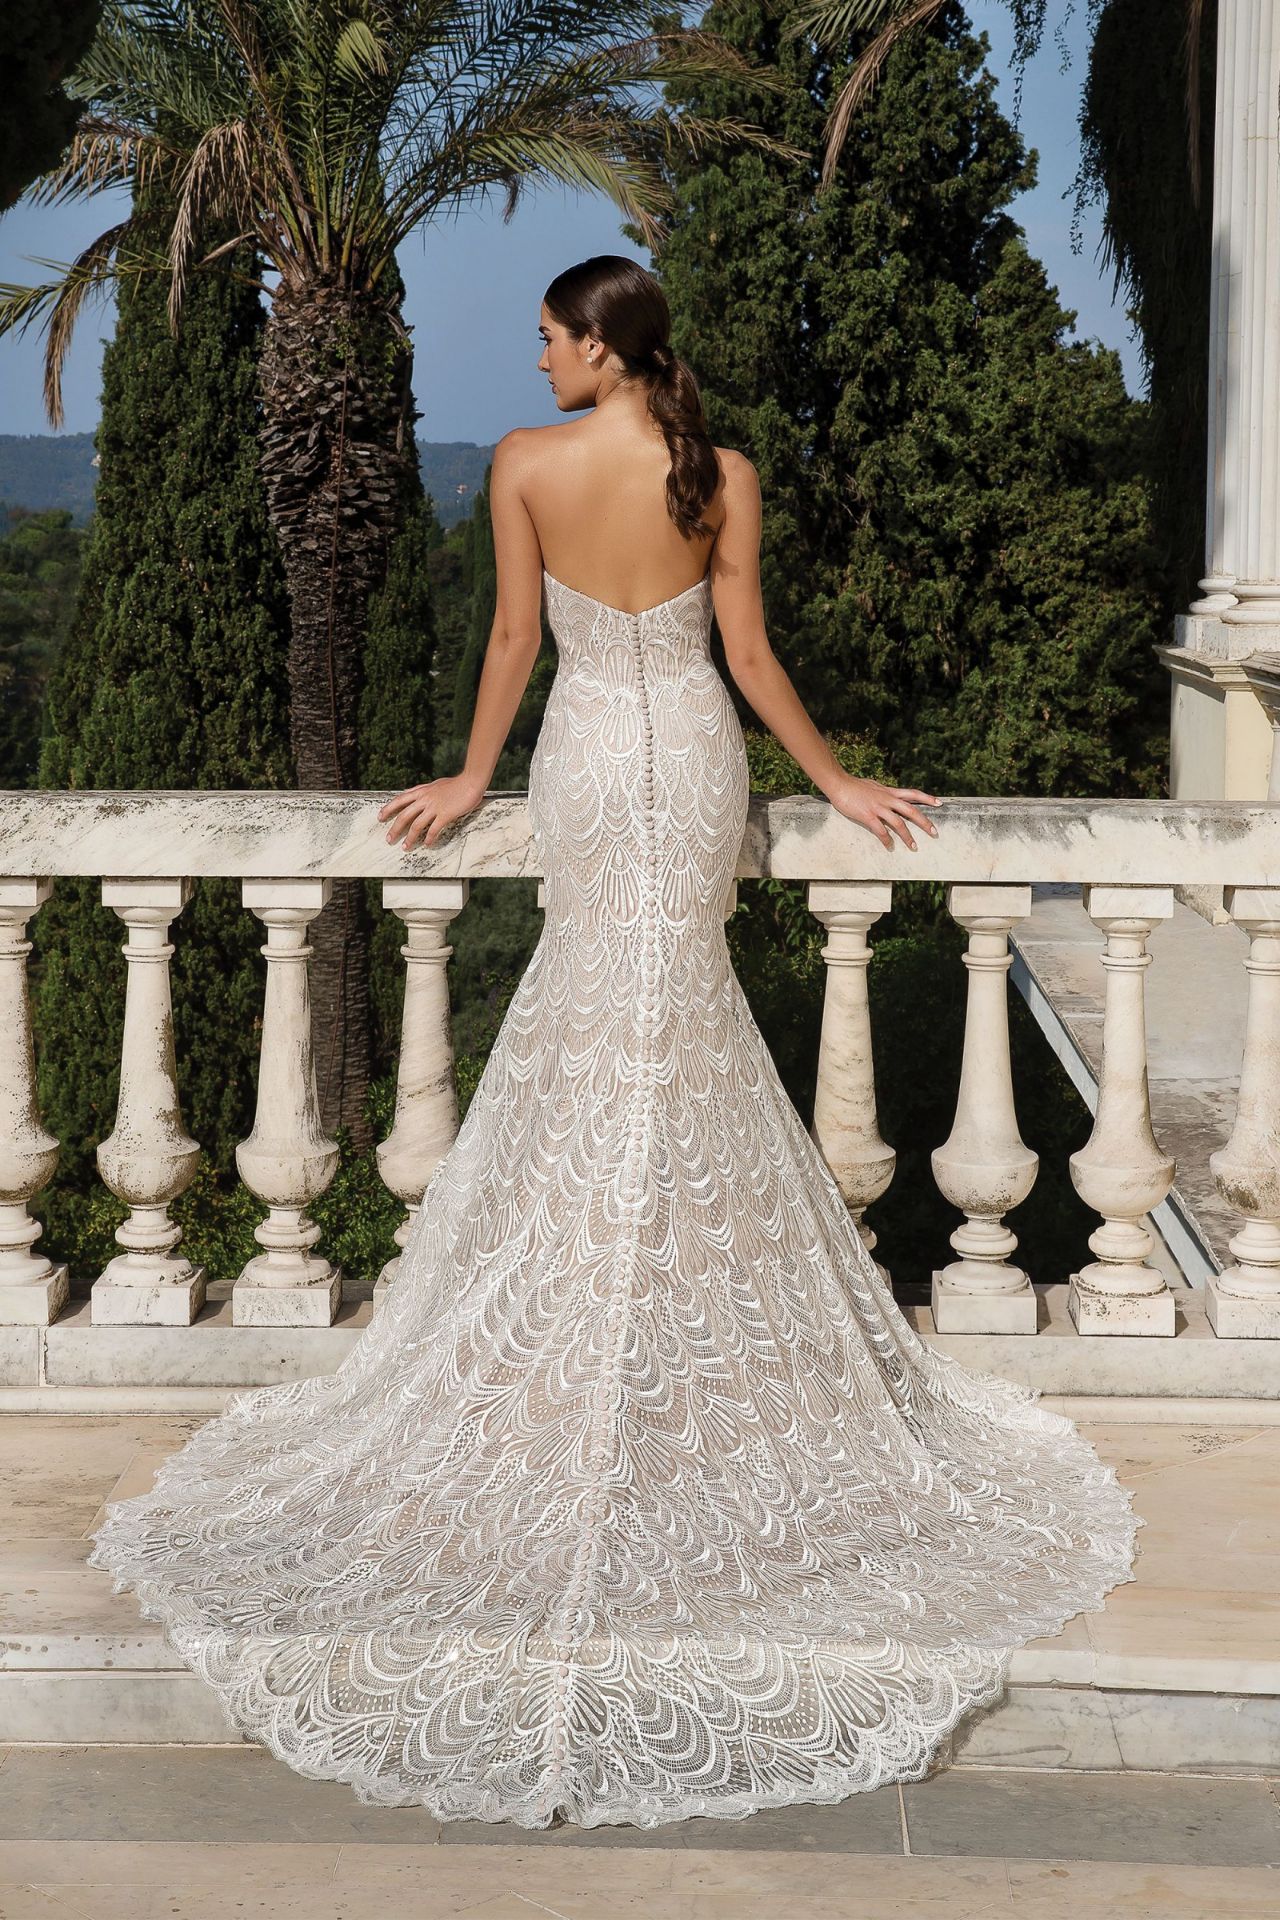 1 x Justin Alexander Designer Allover Lace Wedding With Sequined Neckline - UK Size 12 - RRP £1,595 - Image 2 of 9